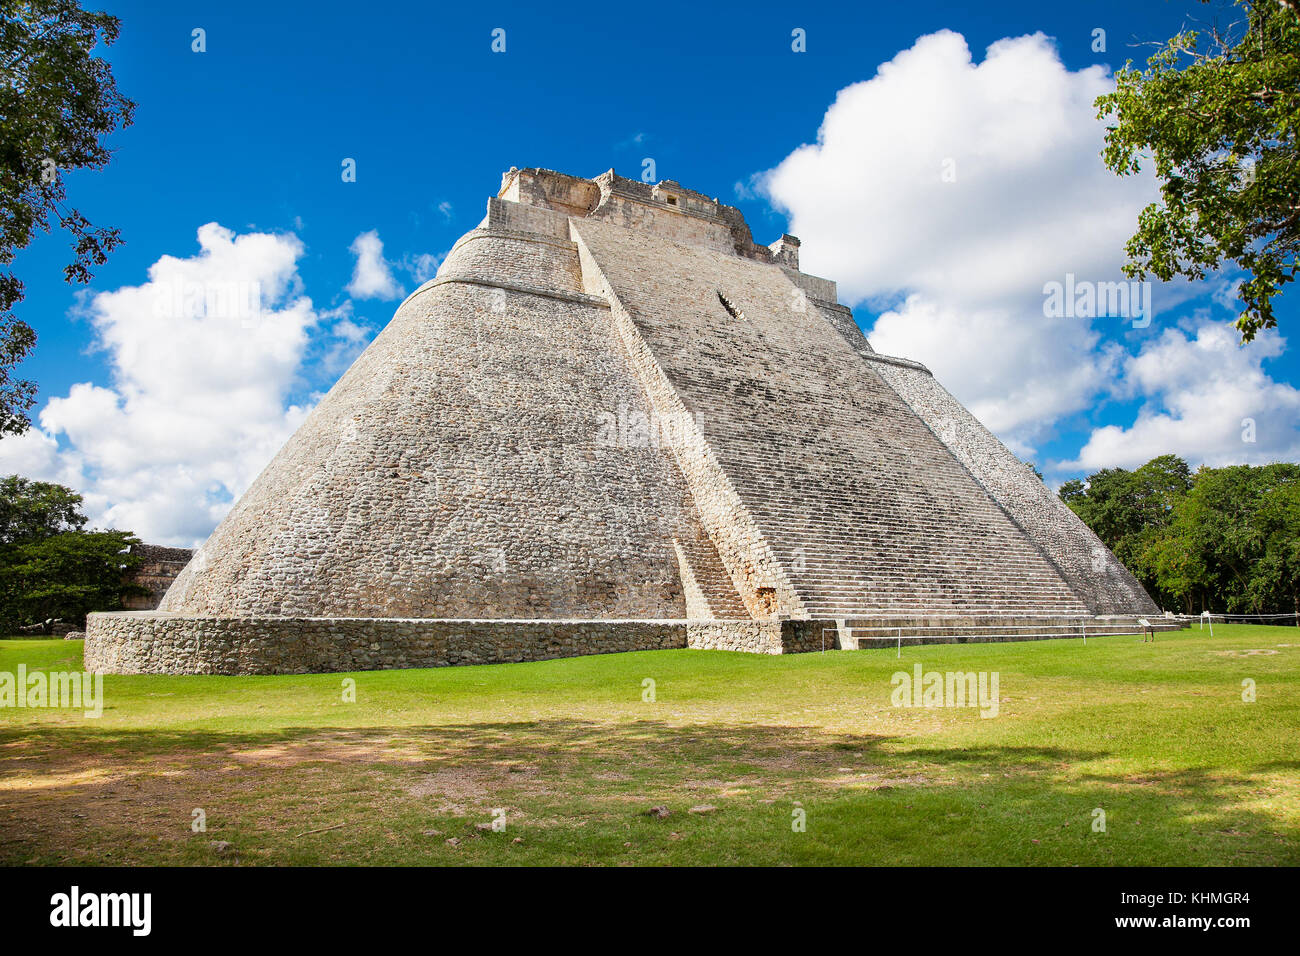 Pyramid of the Magician (Piramide del adivino) in ancient Mayan city Uxmal, Mexico Stock Photo